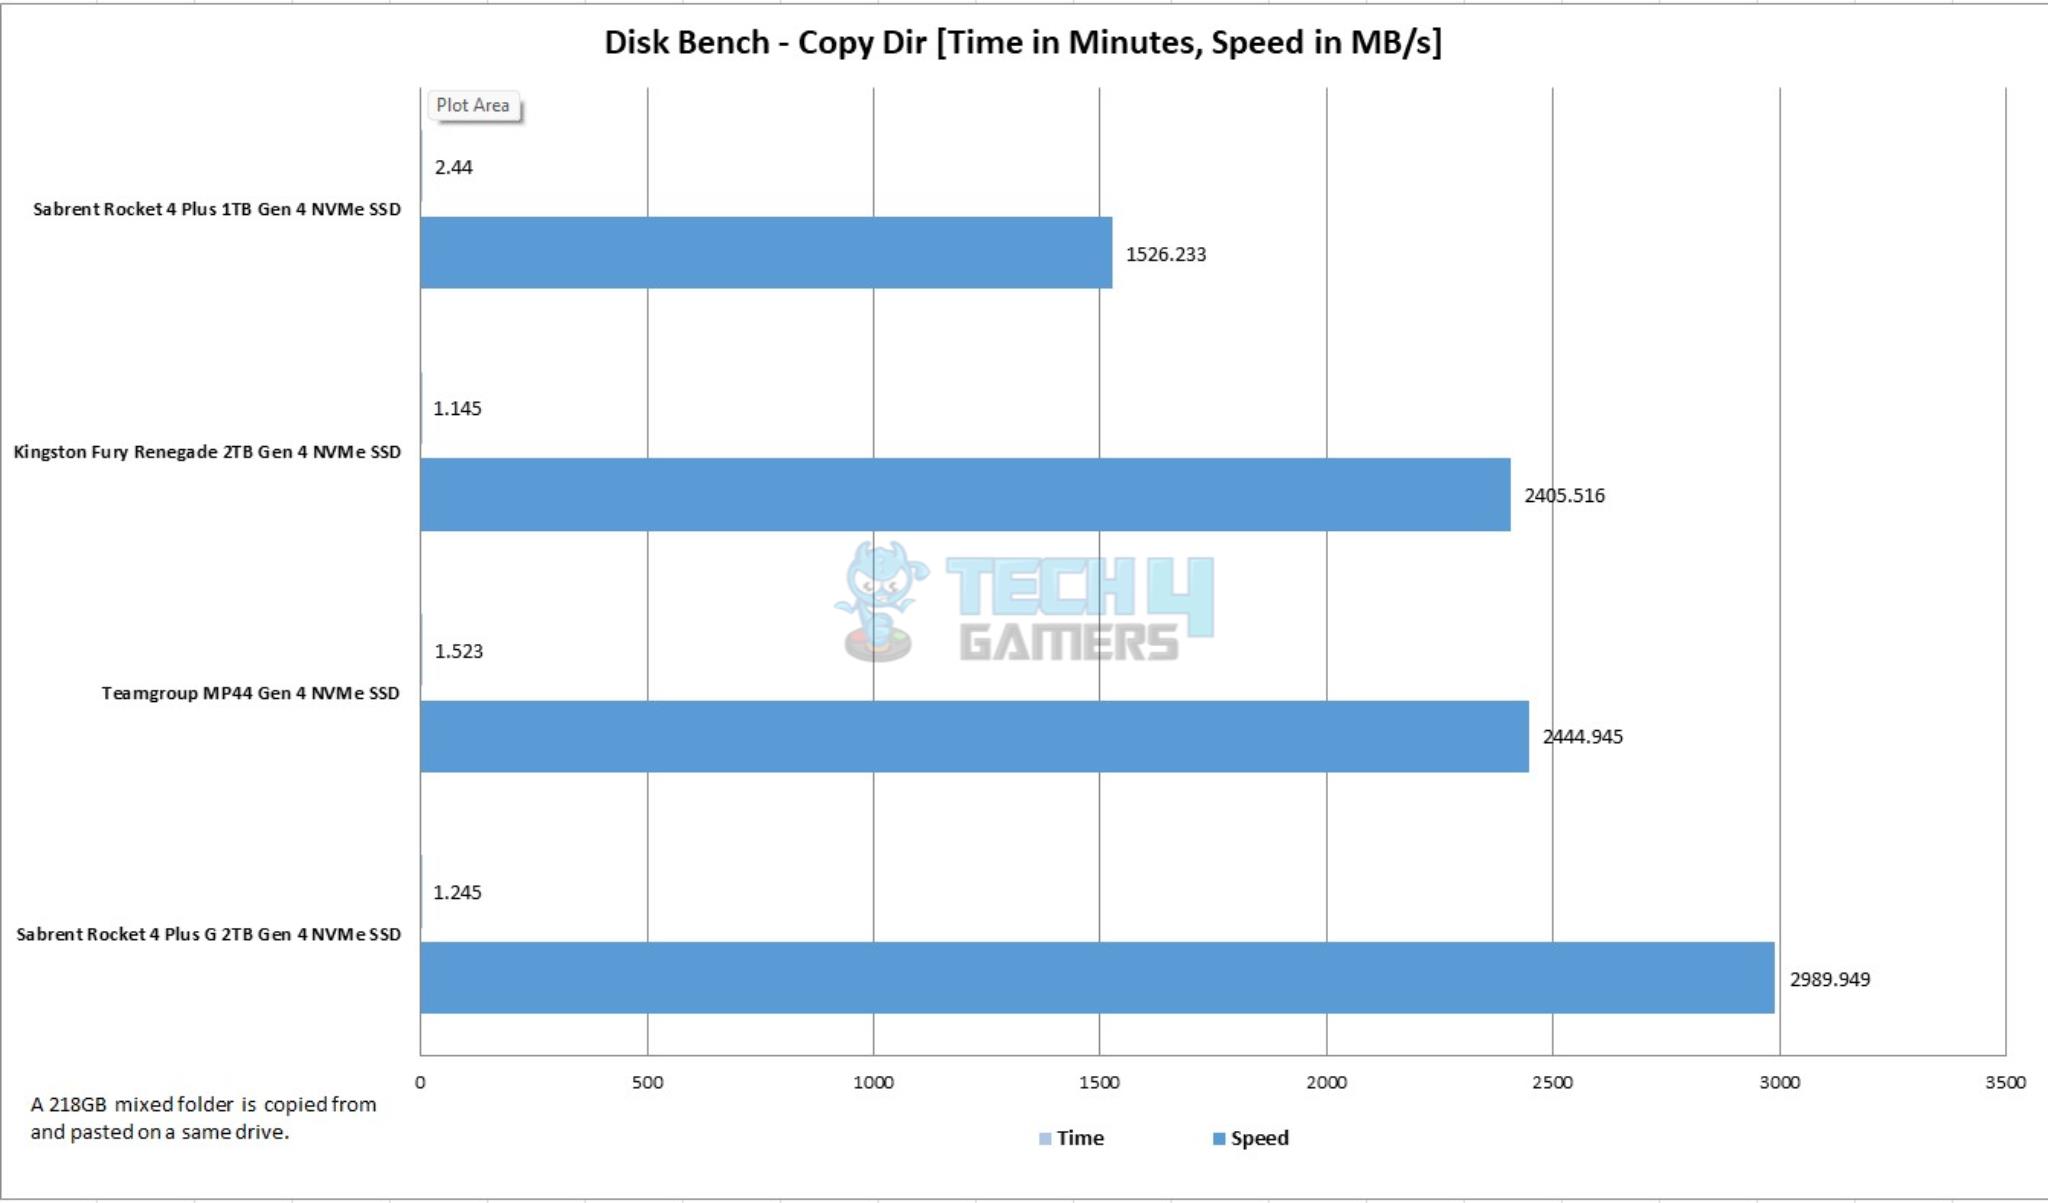 Sabrent Rocket 4 Plus G 2TB NVMe SSD — Disk Bench Copy Dir